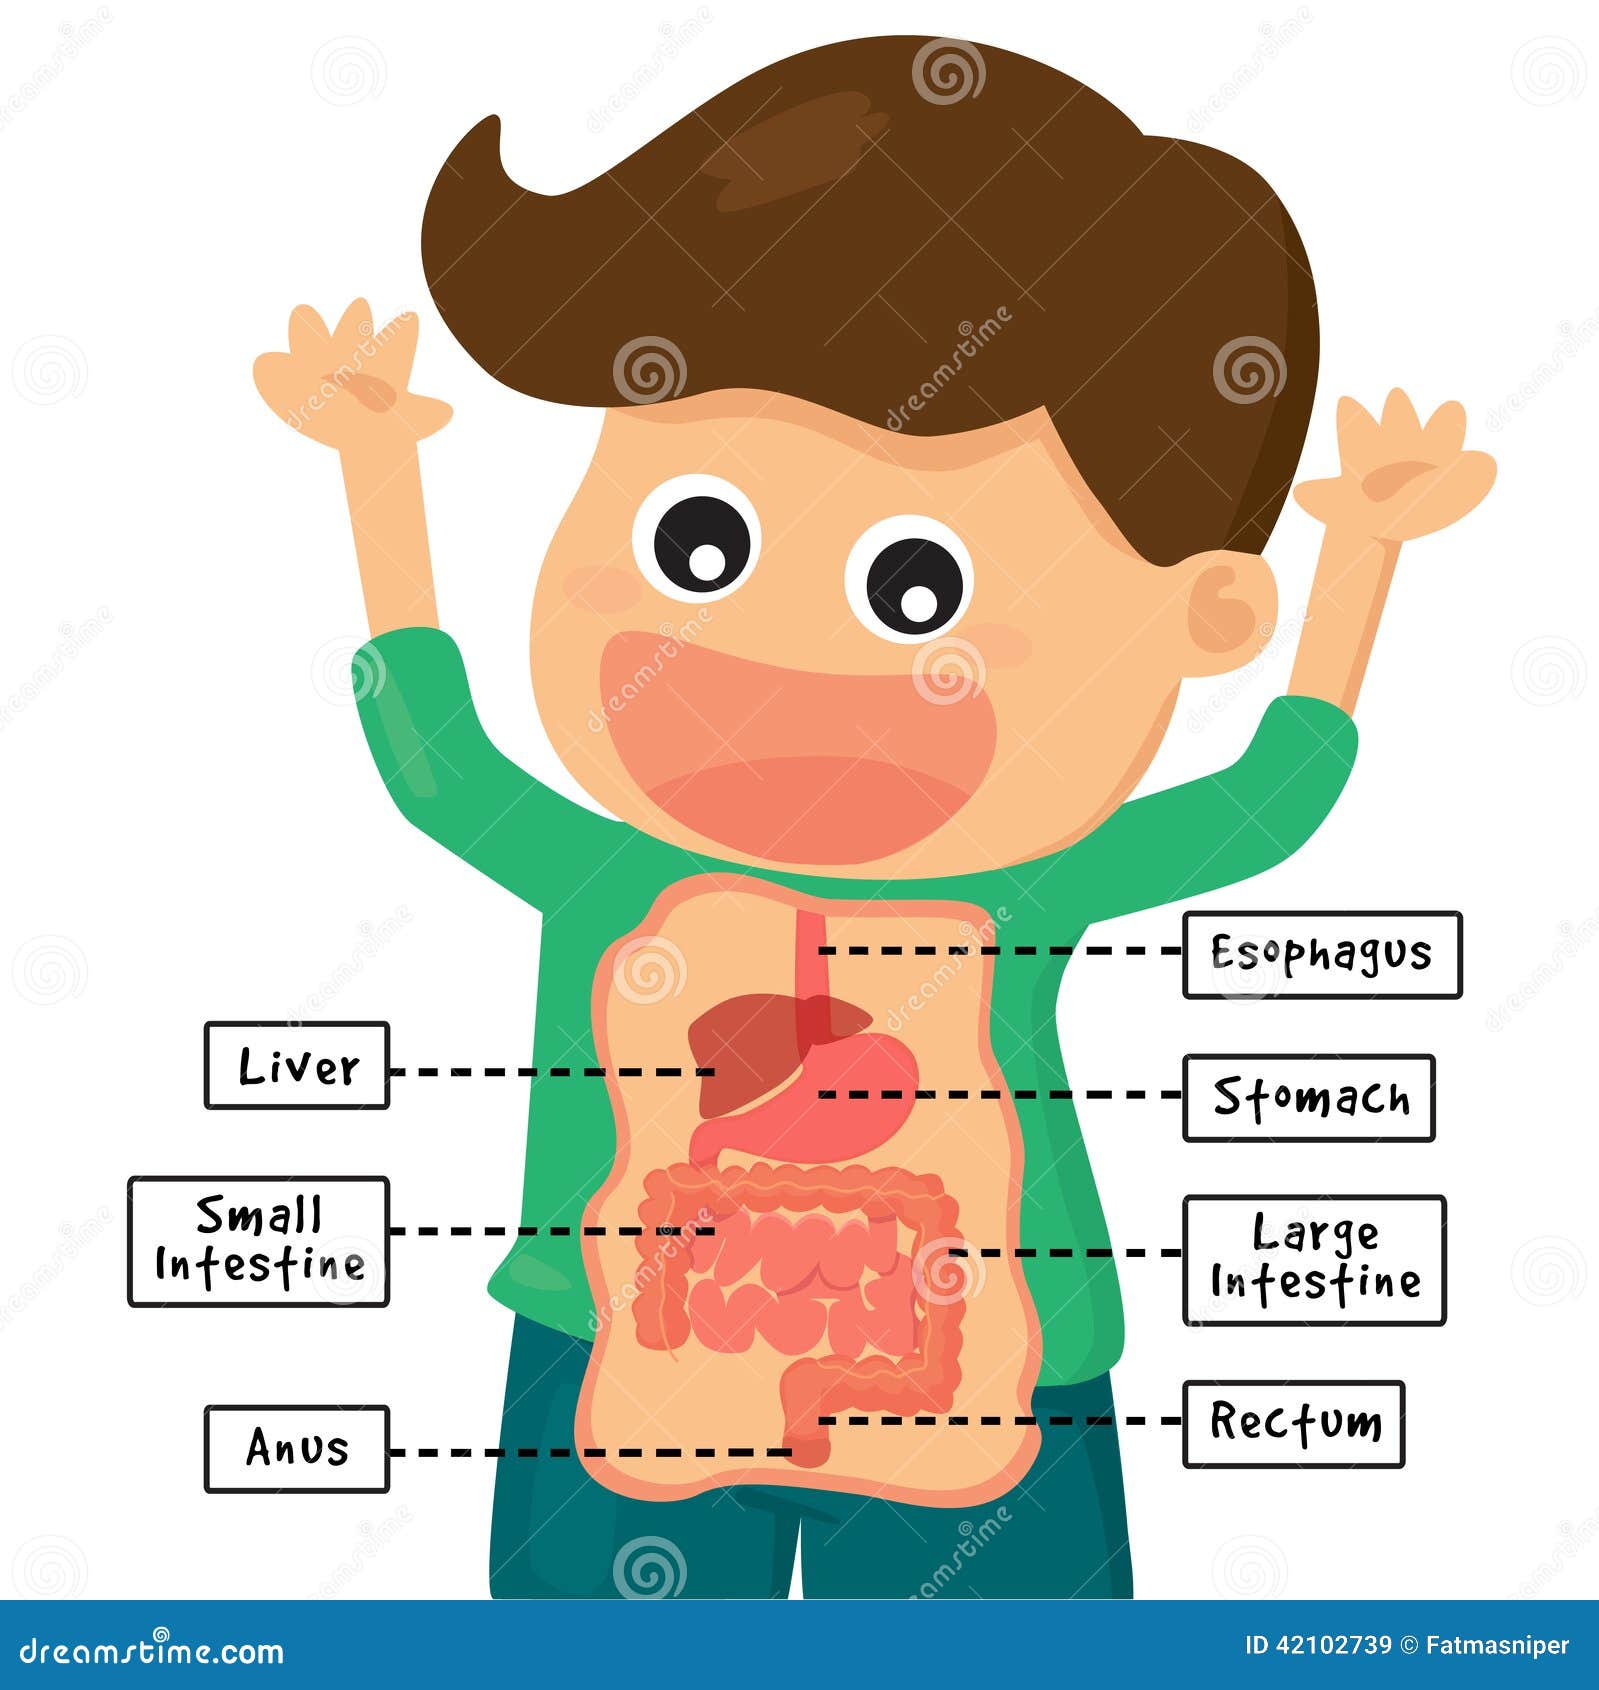 Human Digestion System Stock Illustration - Image: 42102739